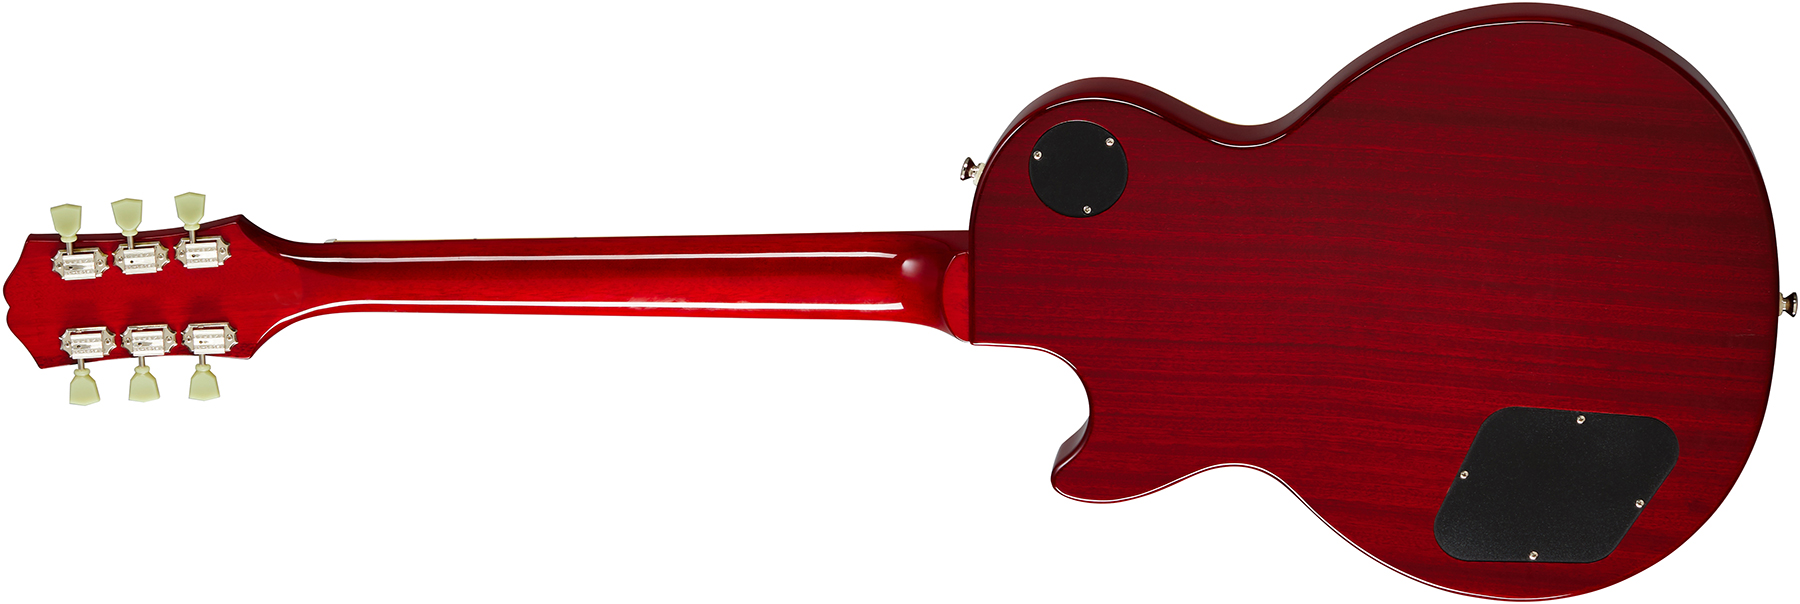 Epiphone Les Paul Standard 50s 2h Ht Rw - Vintage Sunburst - Enkel gesneden elektrische gitaar - Variation 2